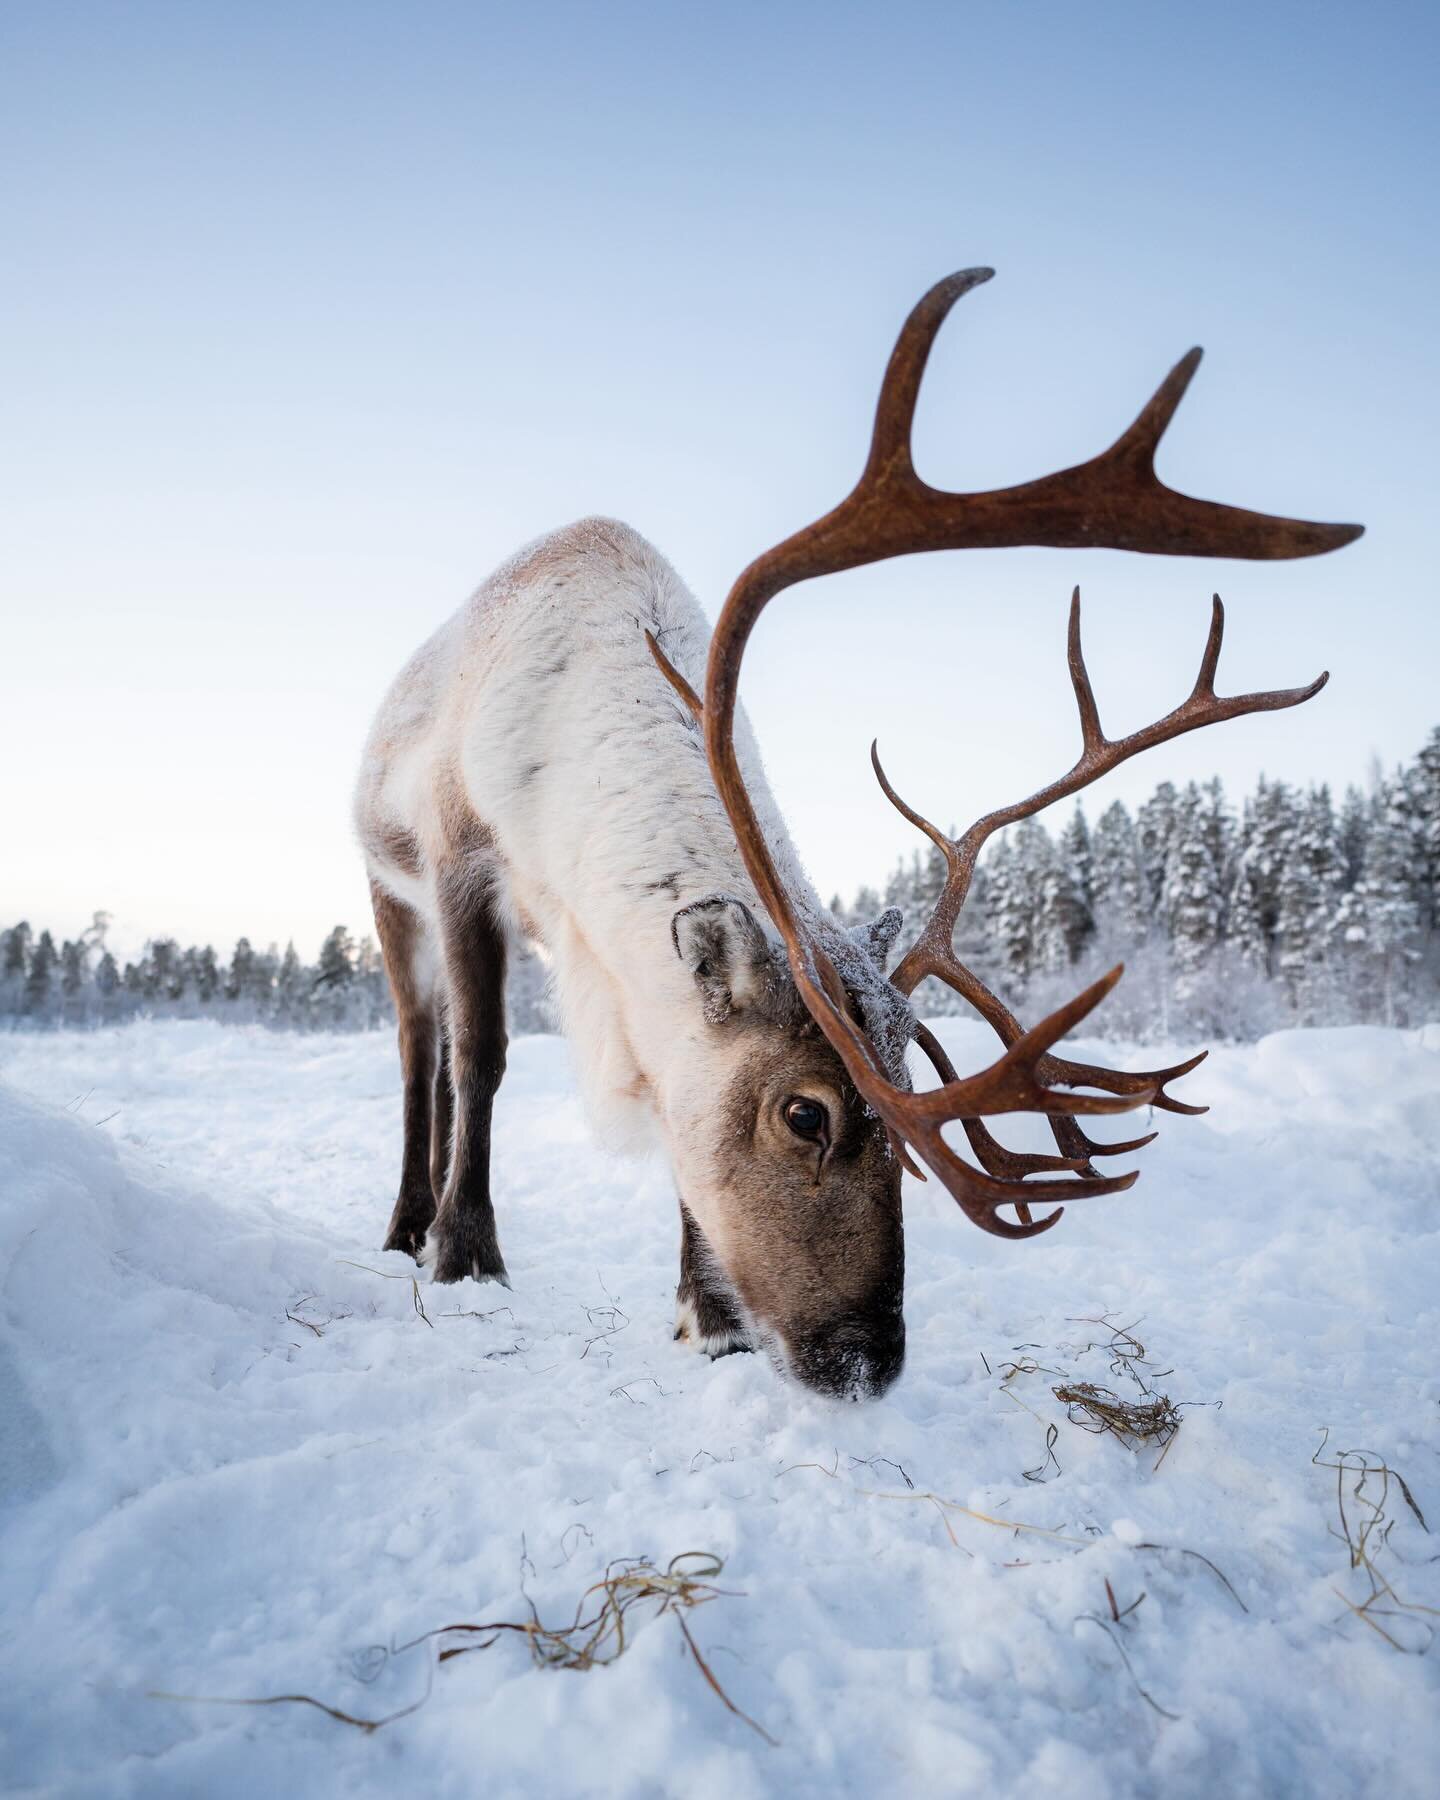 Graceful reindeer embodying the untamed beauty of the Arctic wilderness. ❄️🇫🇮 
.
#lapland #finland #nature #lappi #visitlapland #travel #winter #snow #visitfinland #laplandfinland #naturephotography #suomi #arcticcircle #winterwonderland #reindeer 